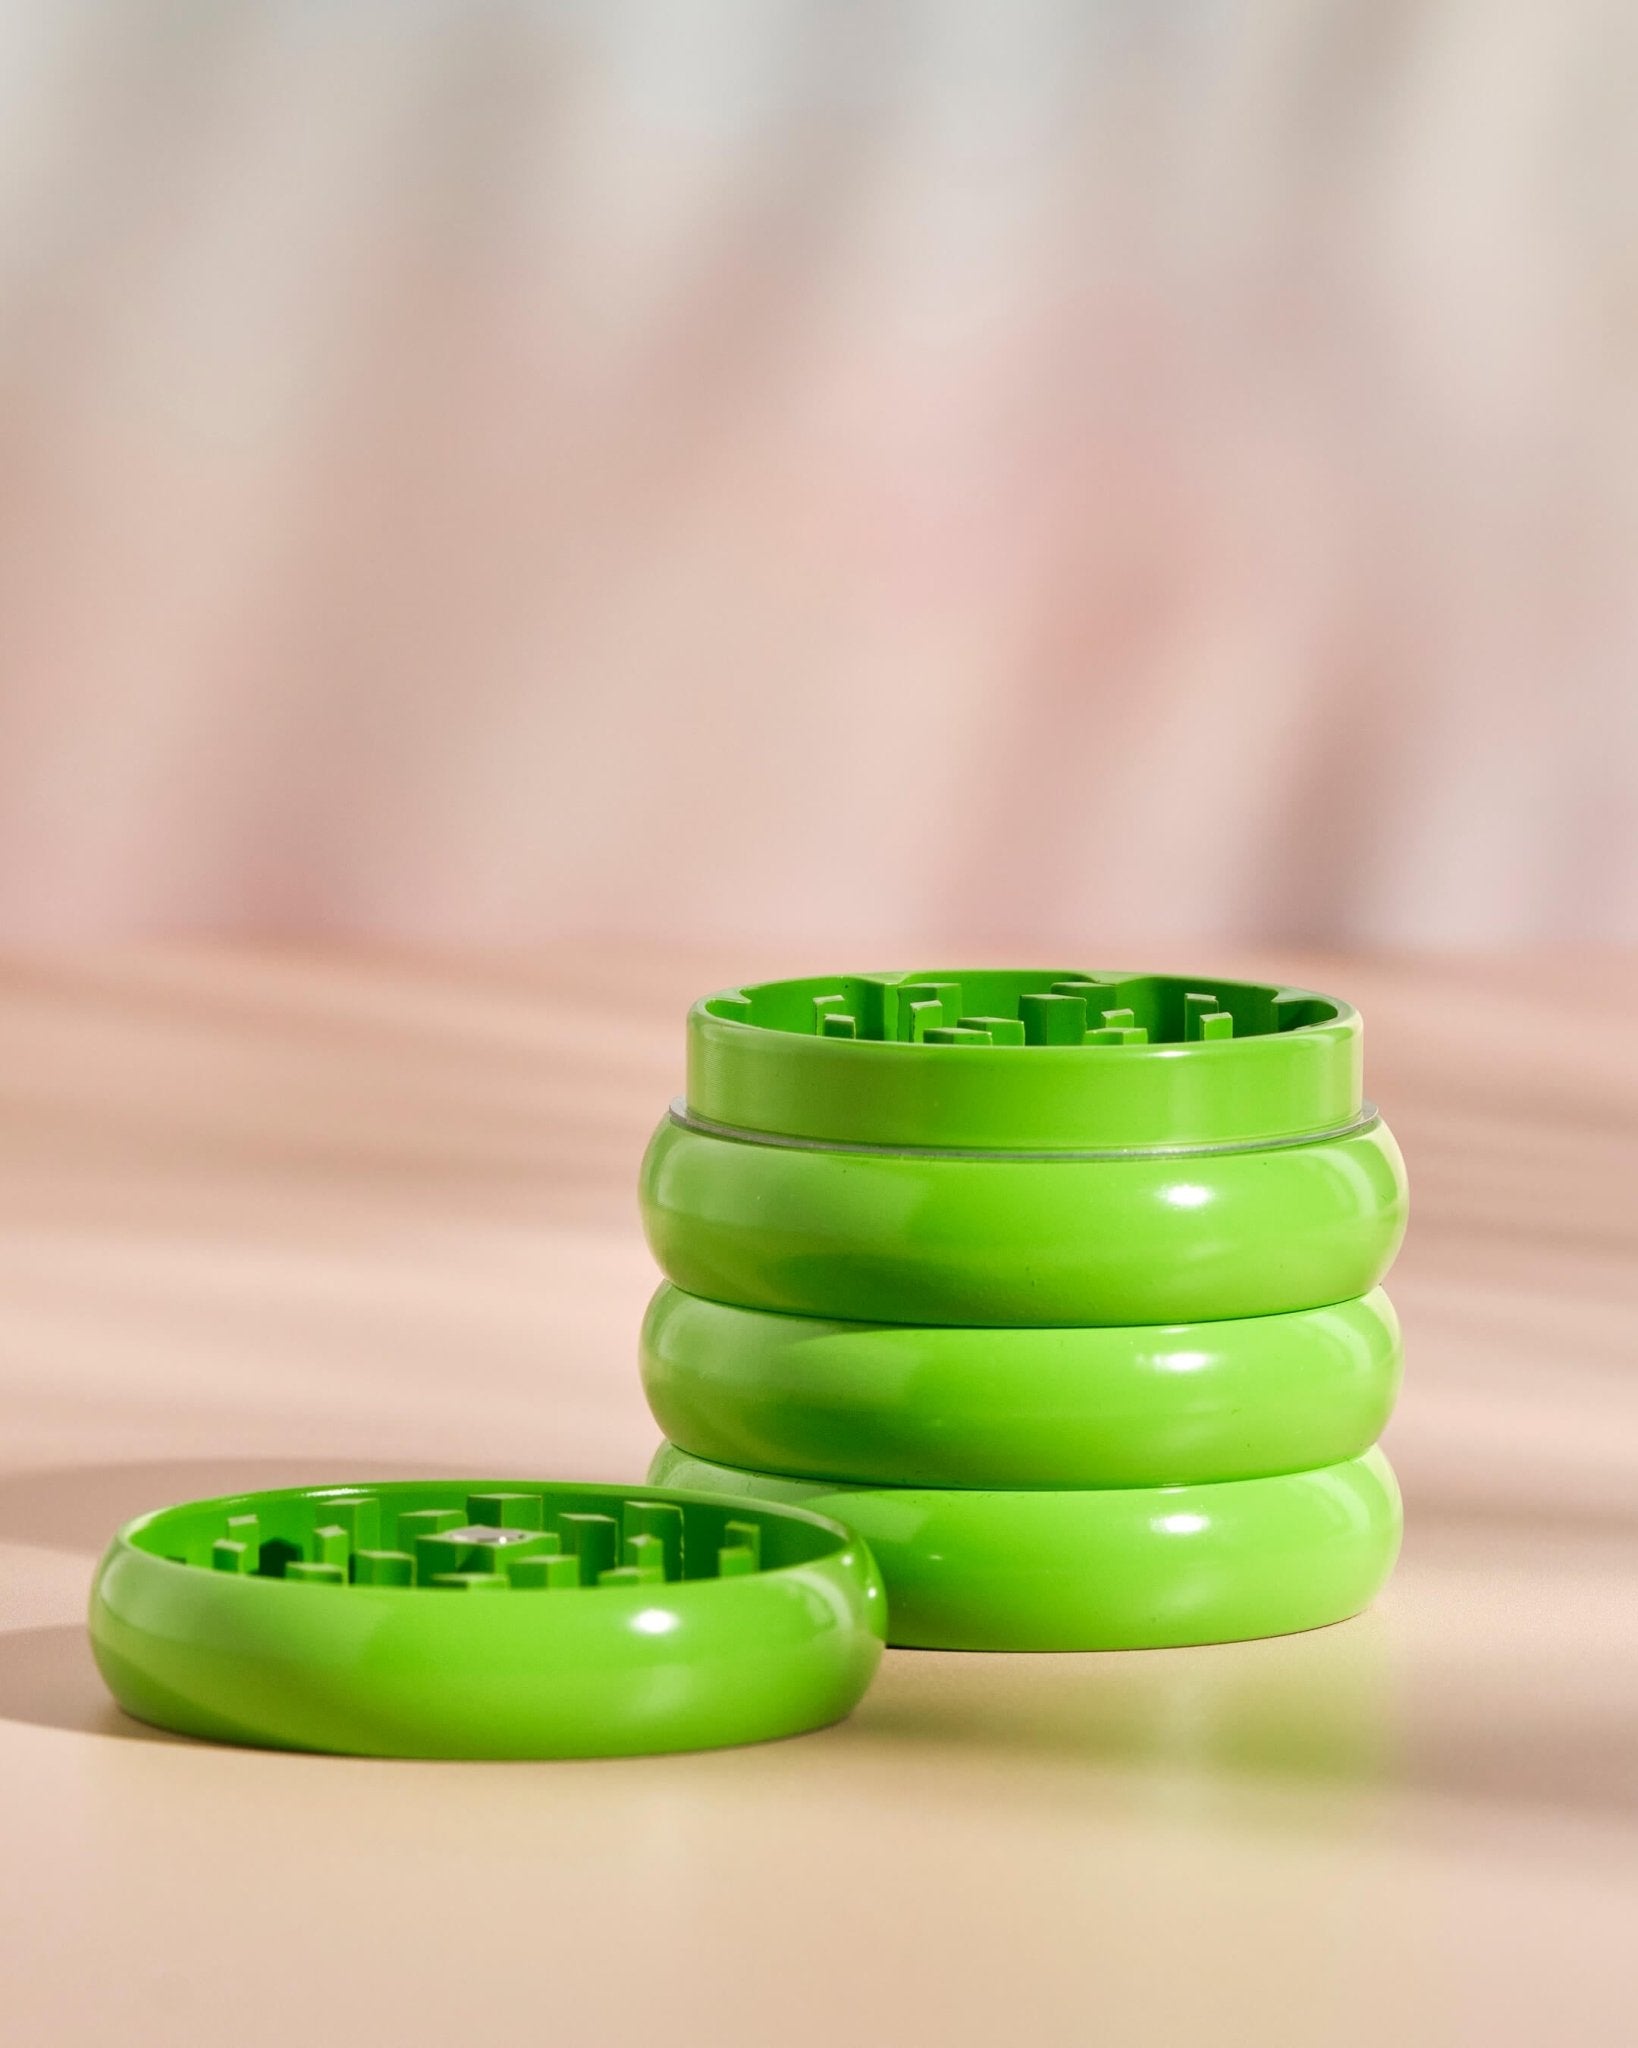 GREEN APPLE WAVY GRINDER - Summer Sunset - ceramic non-stick herb grinder - smooth experience